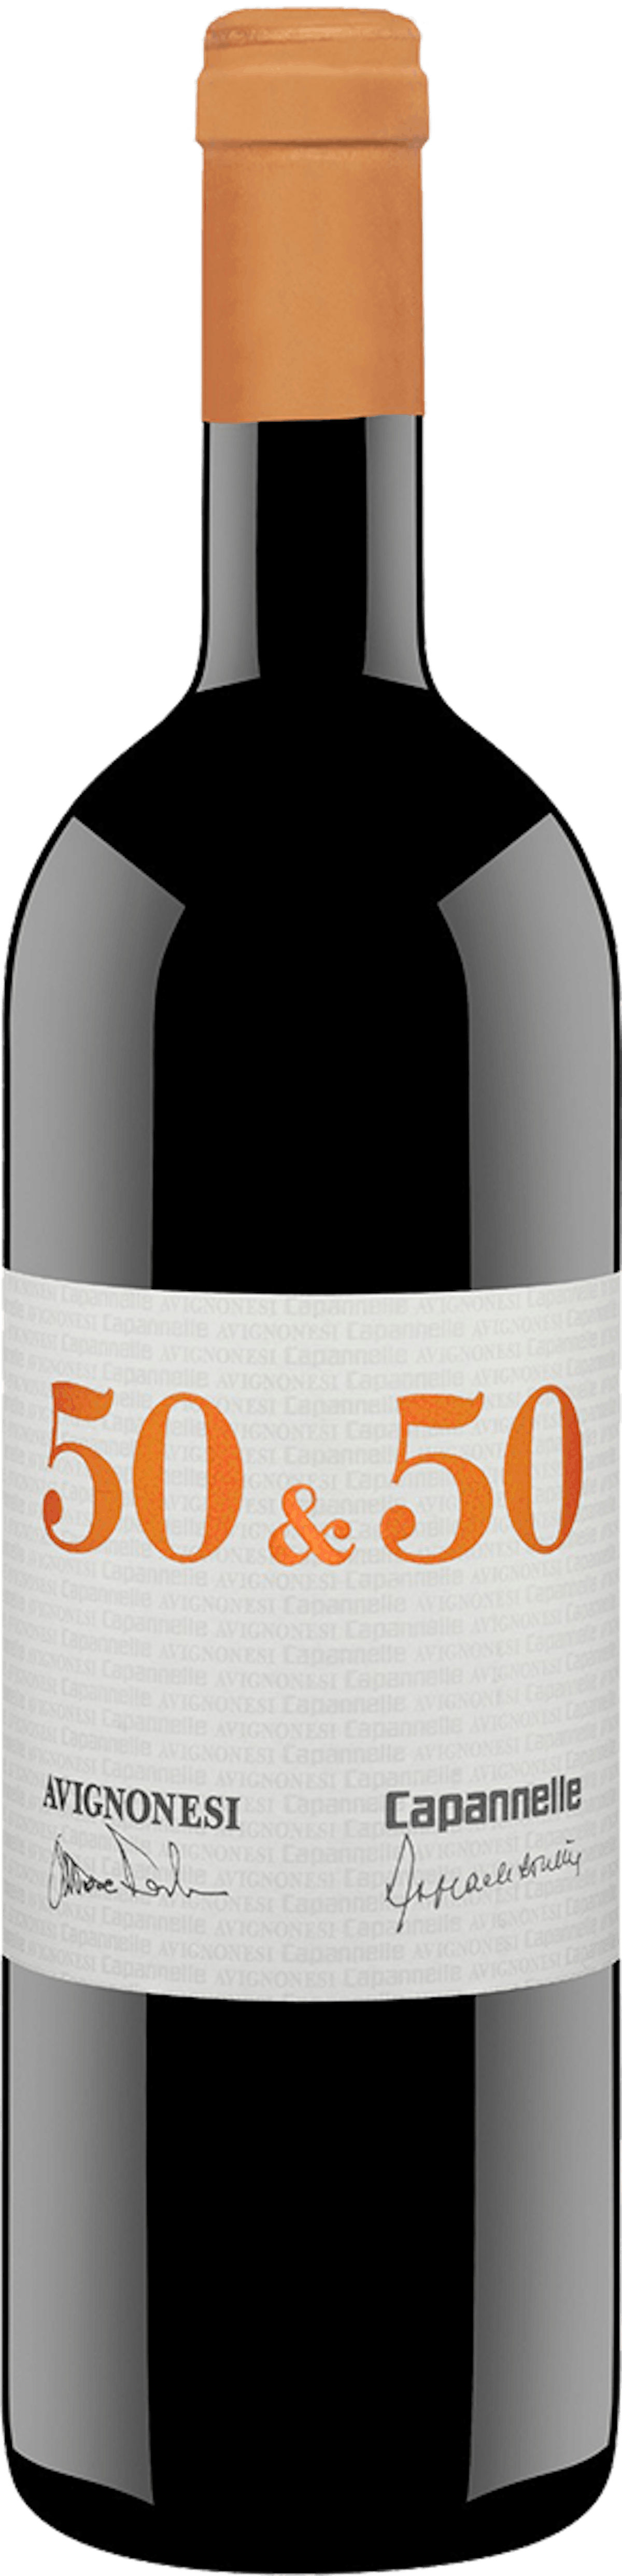 50 & 50 Merlot & Sangiovese Toscana